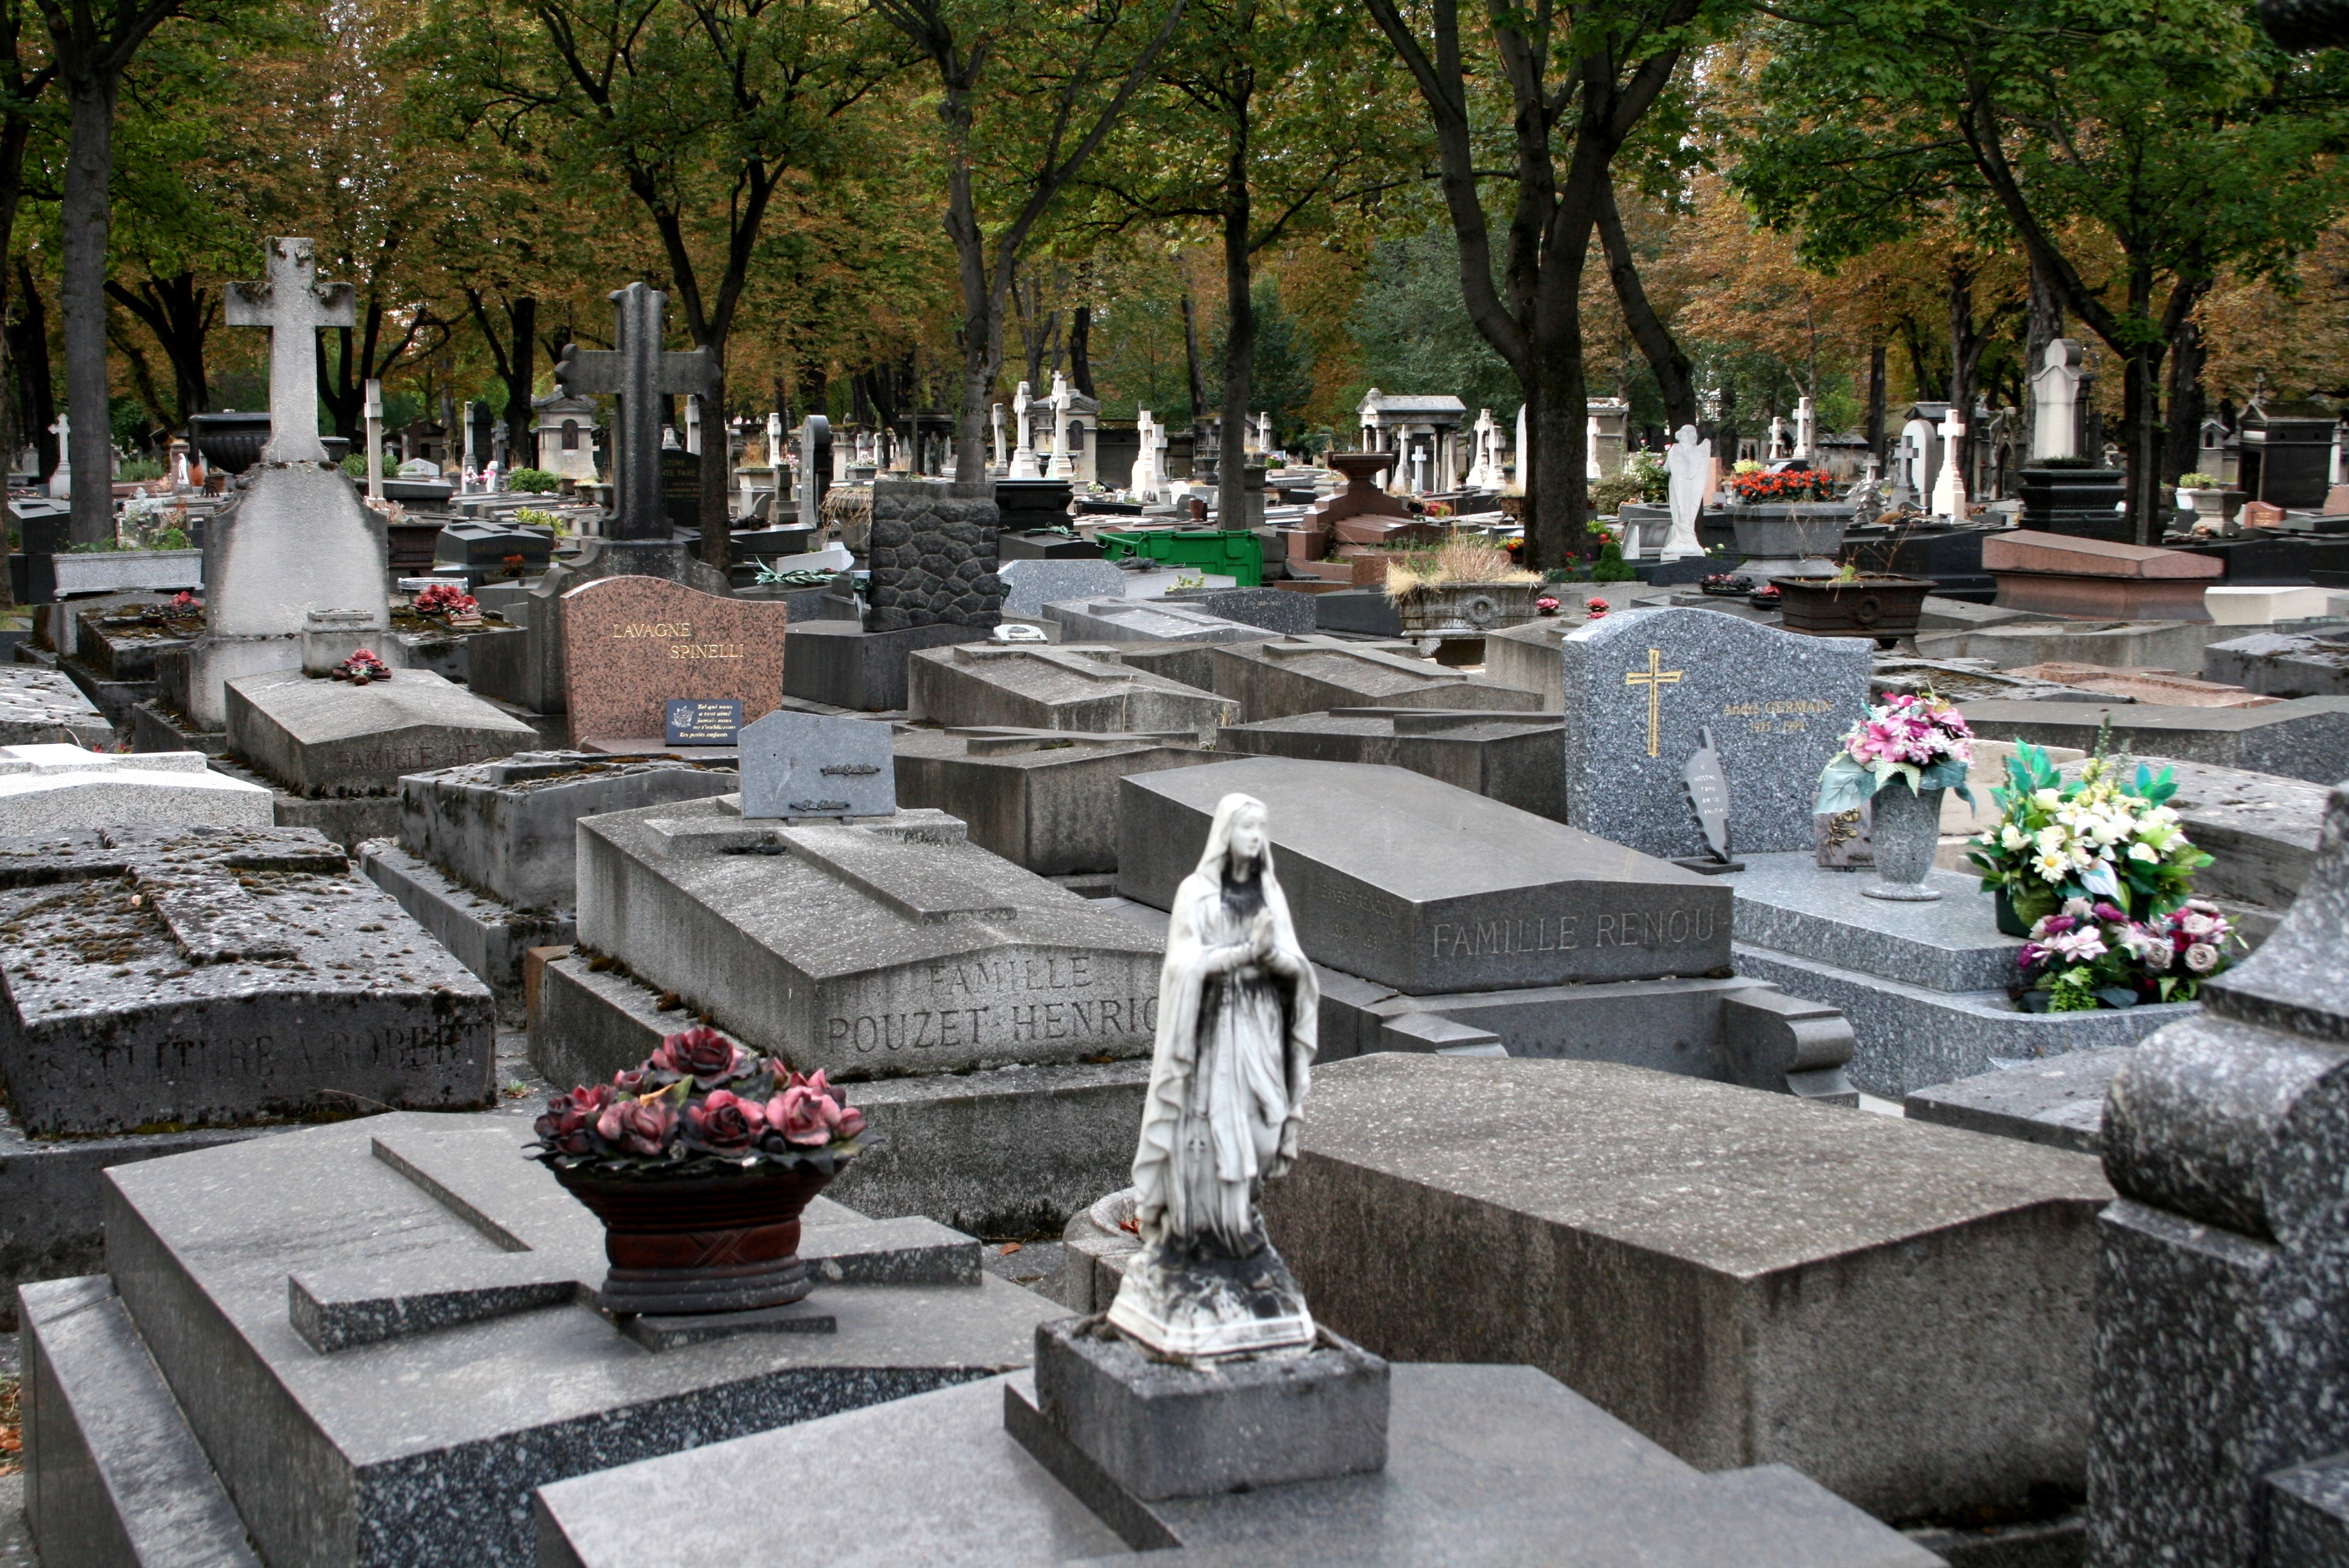 Похоронили шаляпина. Кладбище Батиньоль в Париже. Могила Шаляпина кладбище Батиньоль в Париже. Могила Федора Шаляпина.